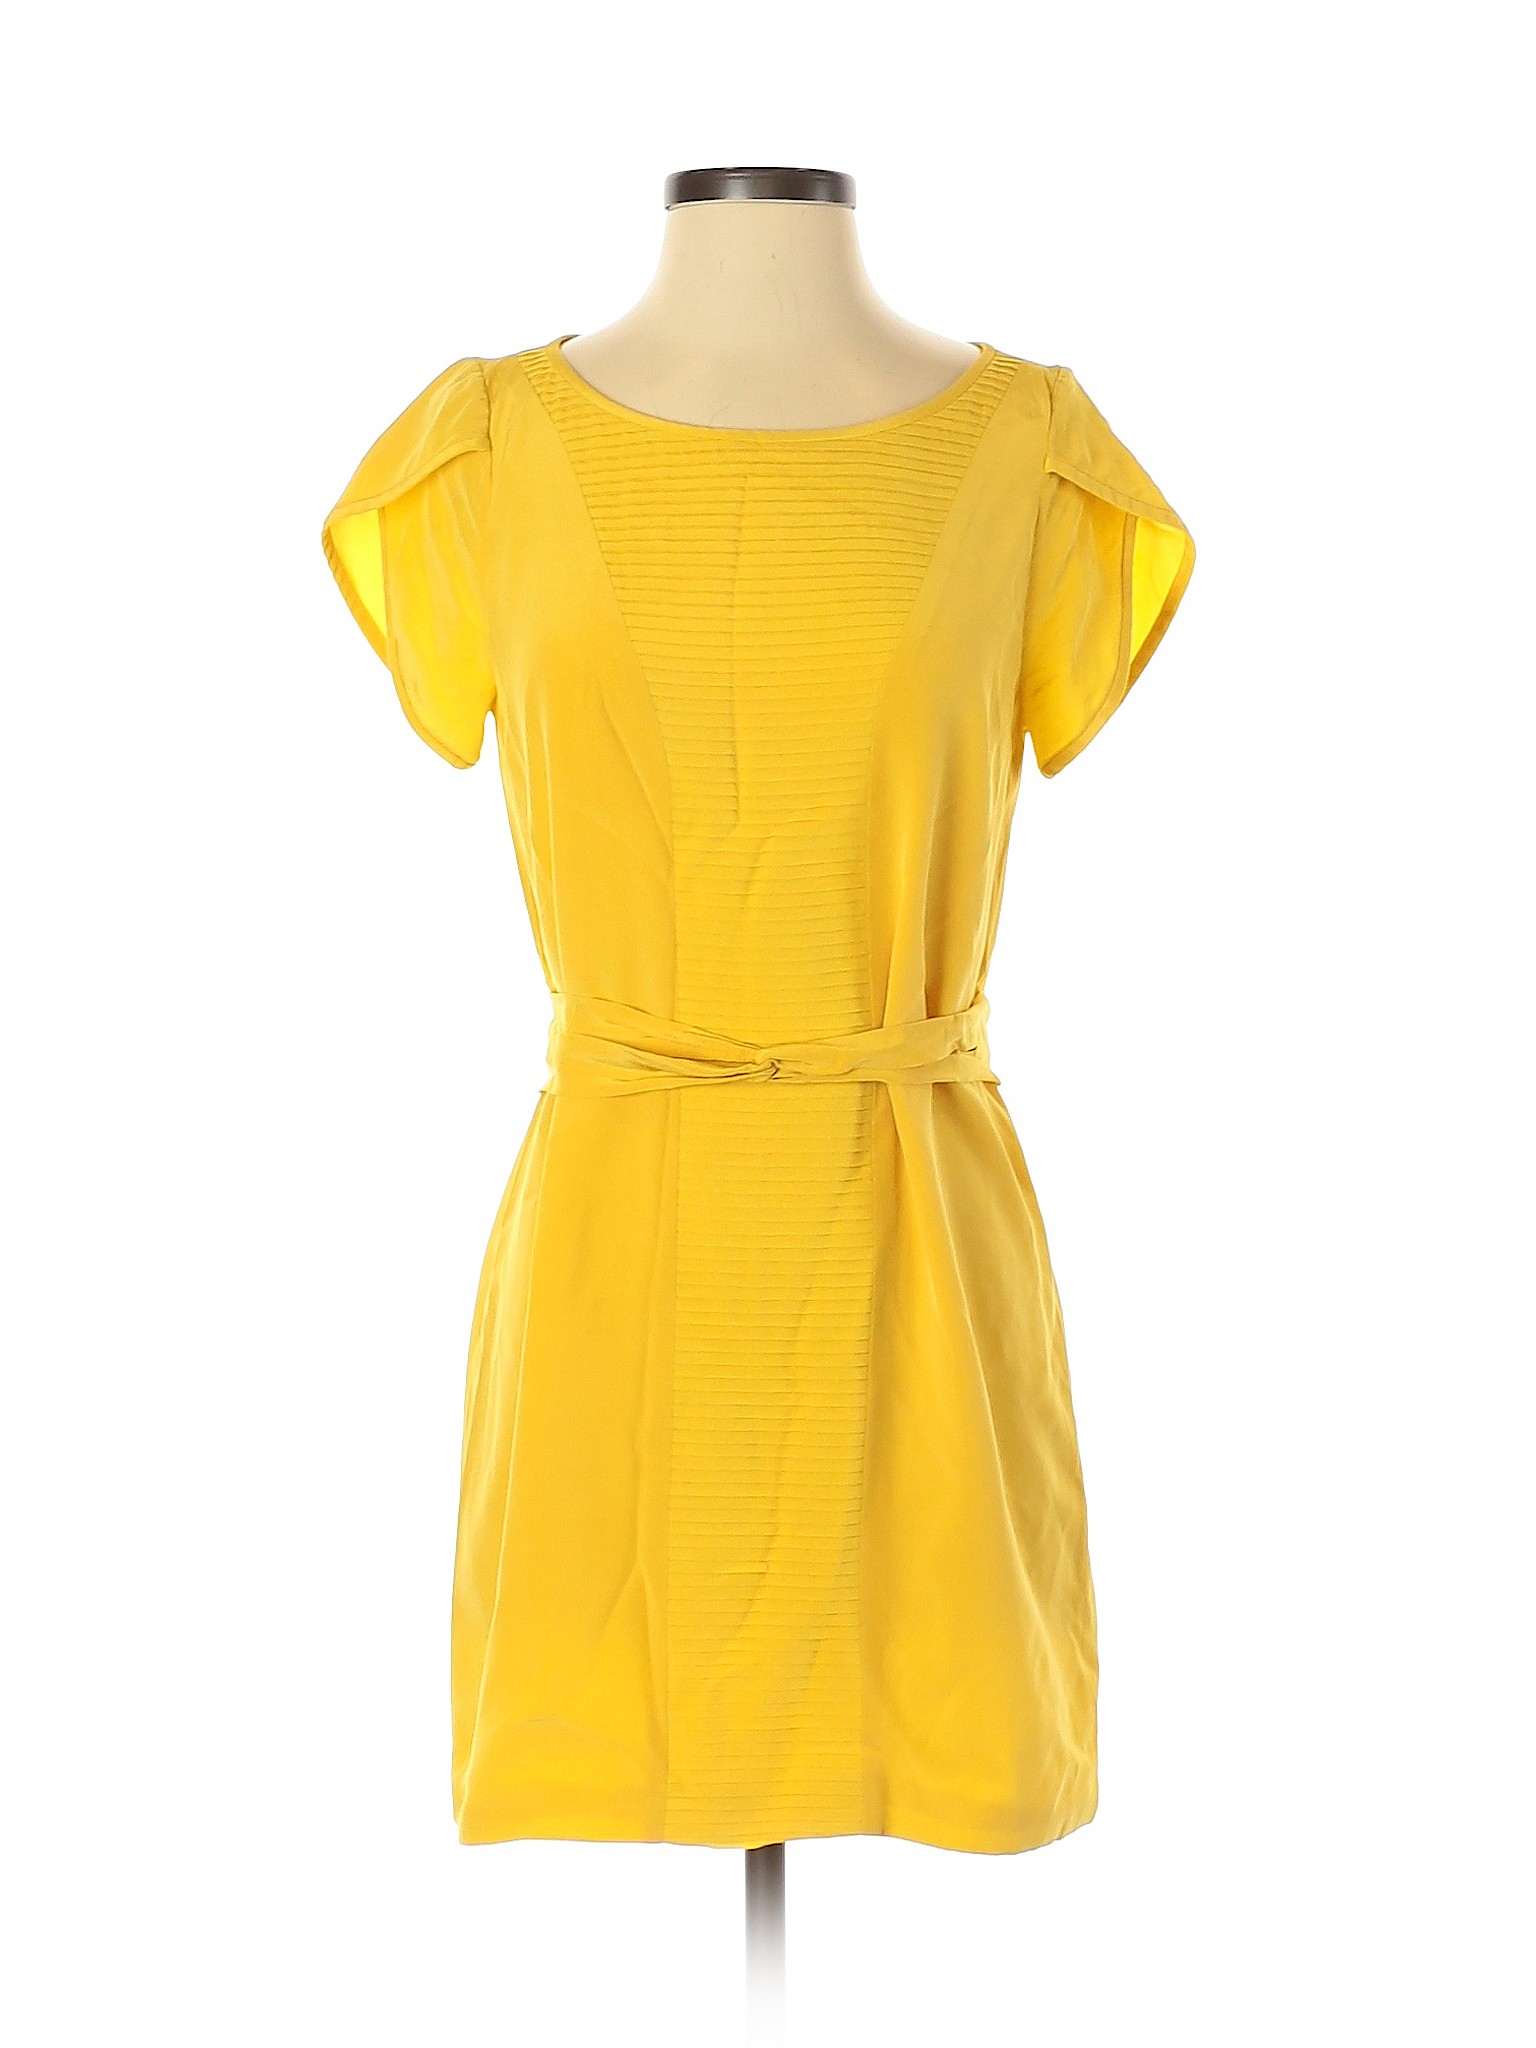 Details about Tibi Women Yellow Casual Dress 4